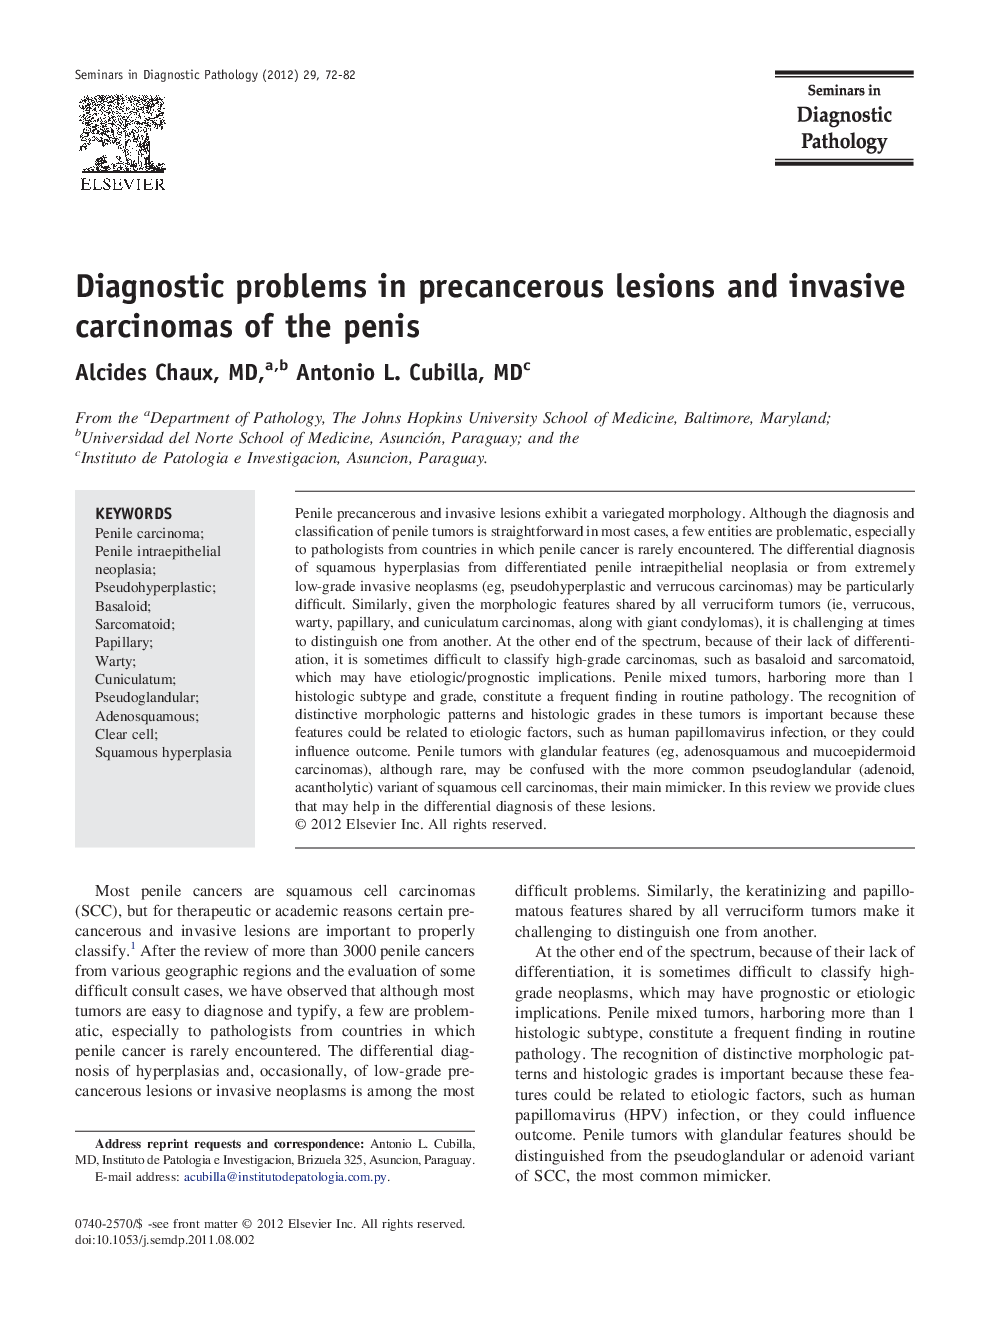 Diagnostic problems in precancerous lesions and invasive carcinomas of the penis